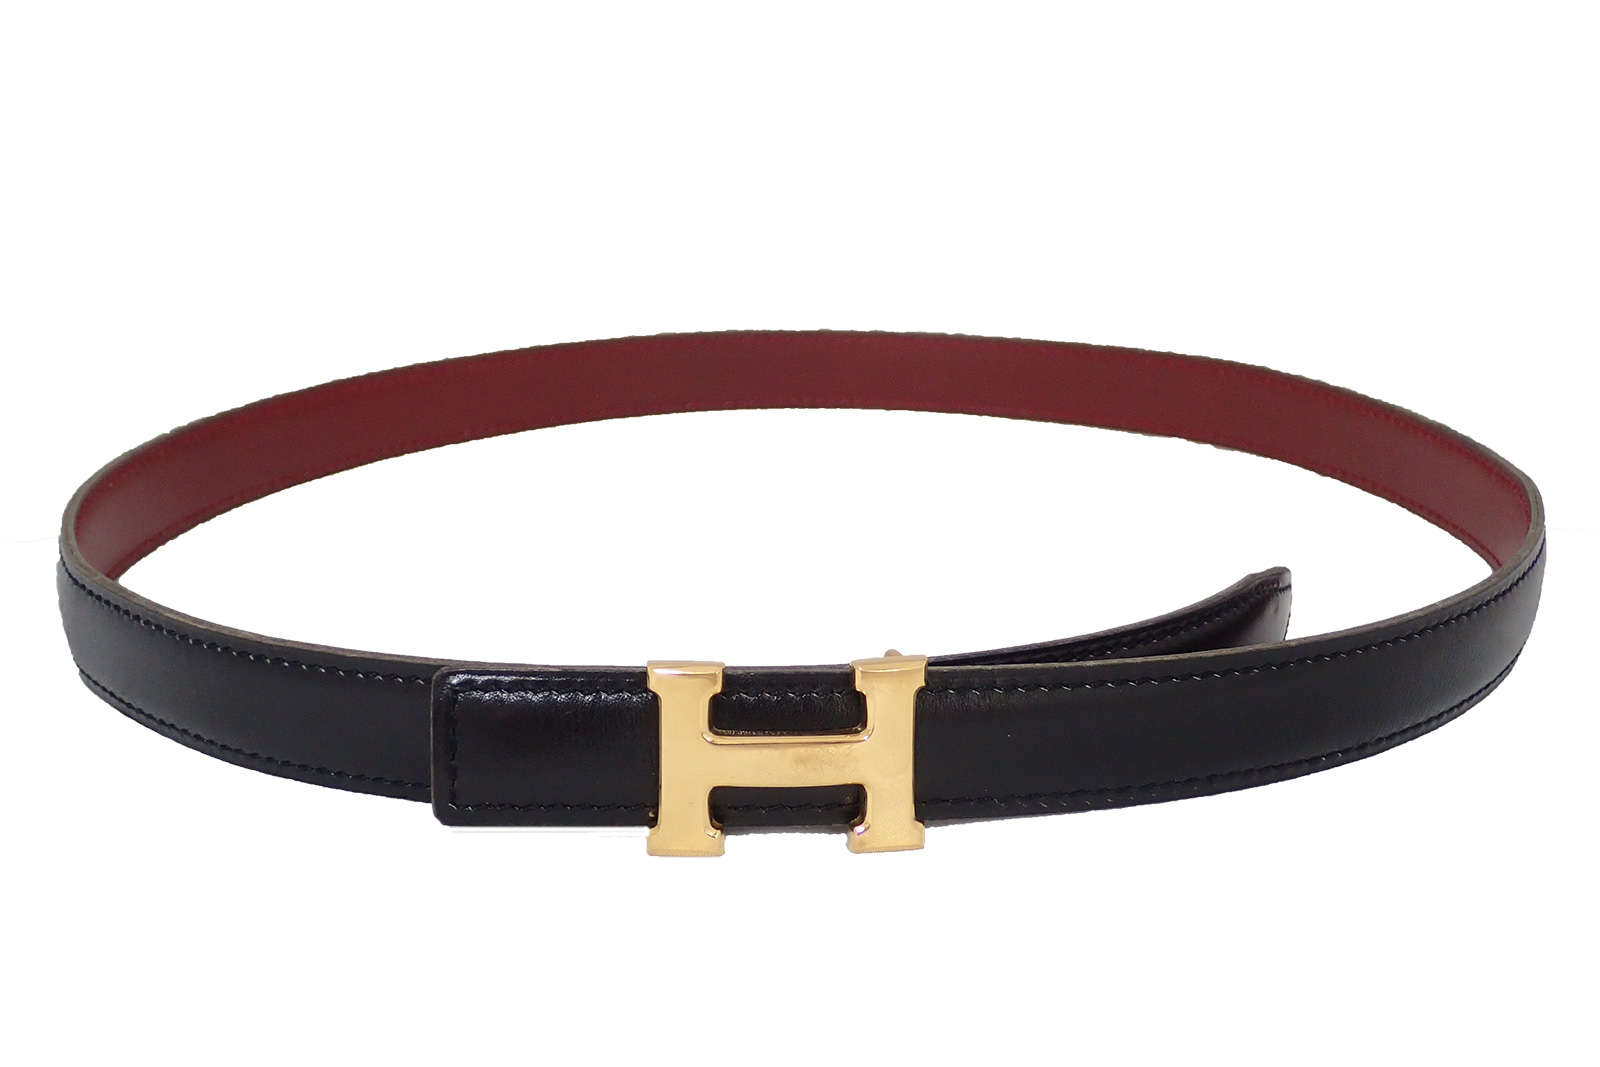 hermes-belt-belt-size-conversion-chart-belt-size-guide-elliot-rhodes-clothing-sizes-in-the